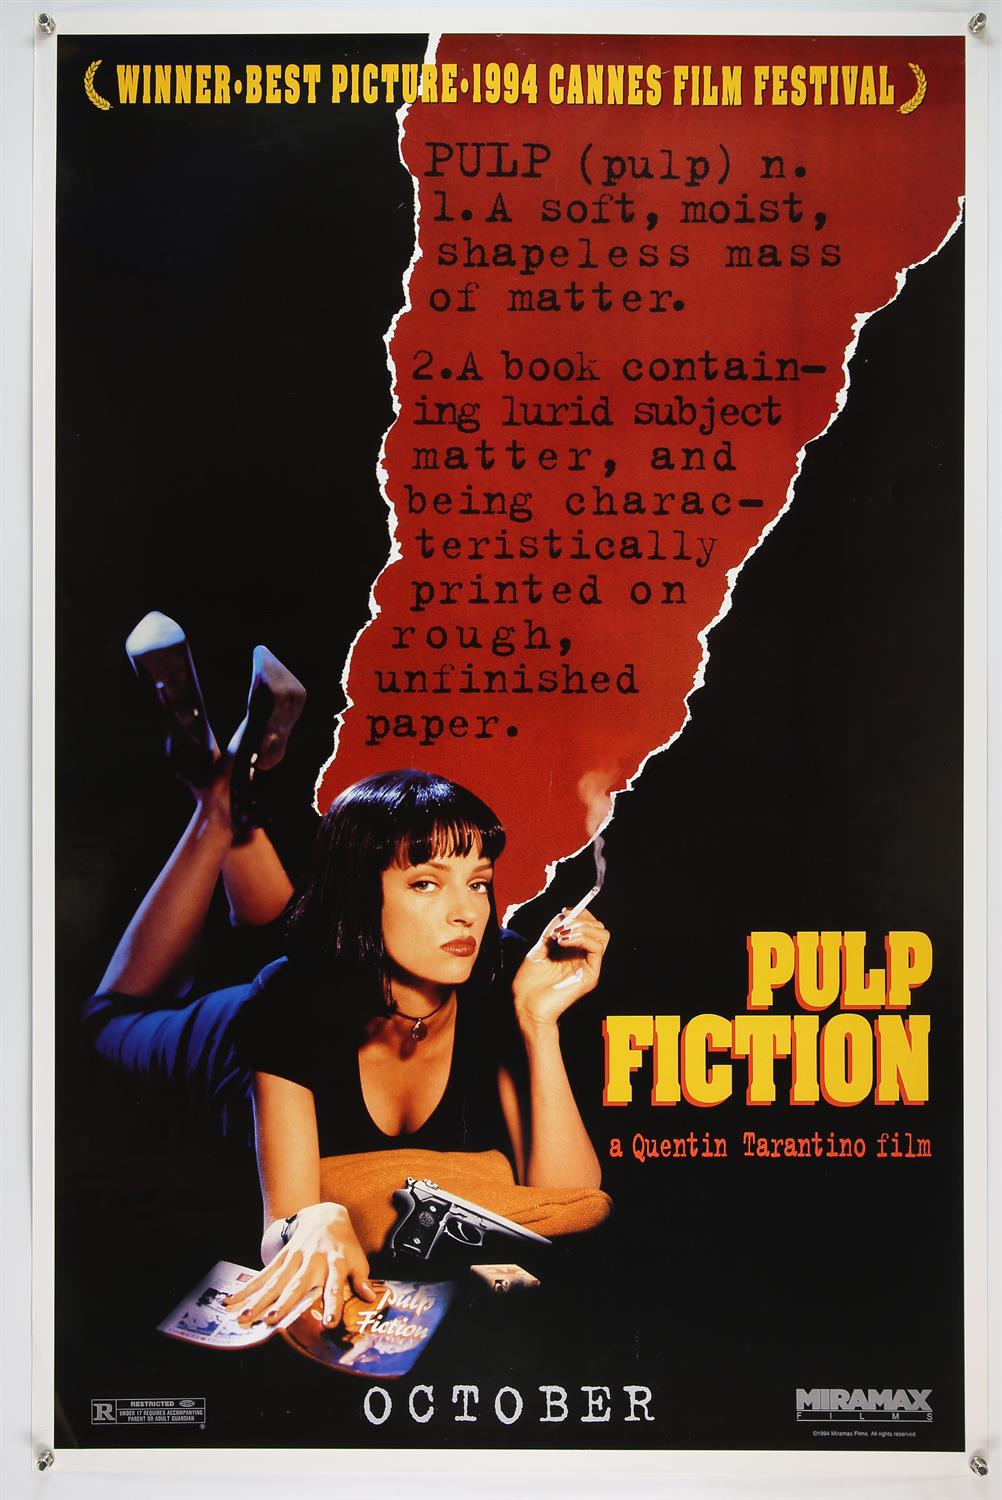 Pulp Fiction (1994) US One Sheet film poster for the Tarantino film starring Uma Thurman,